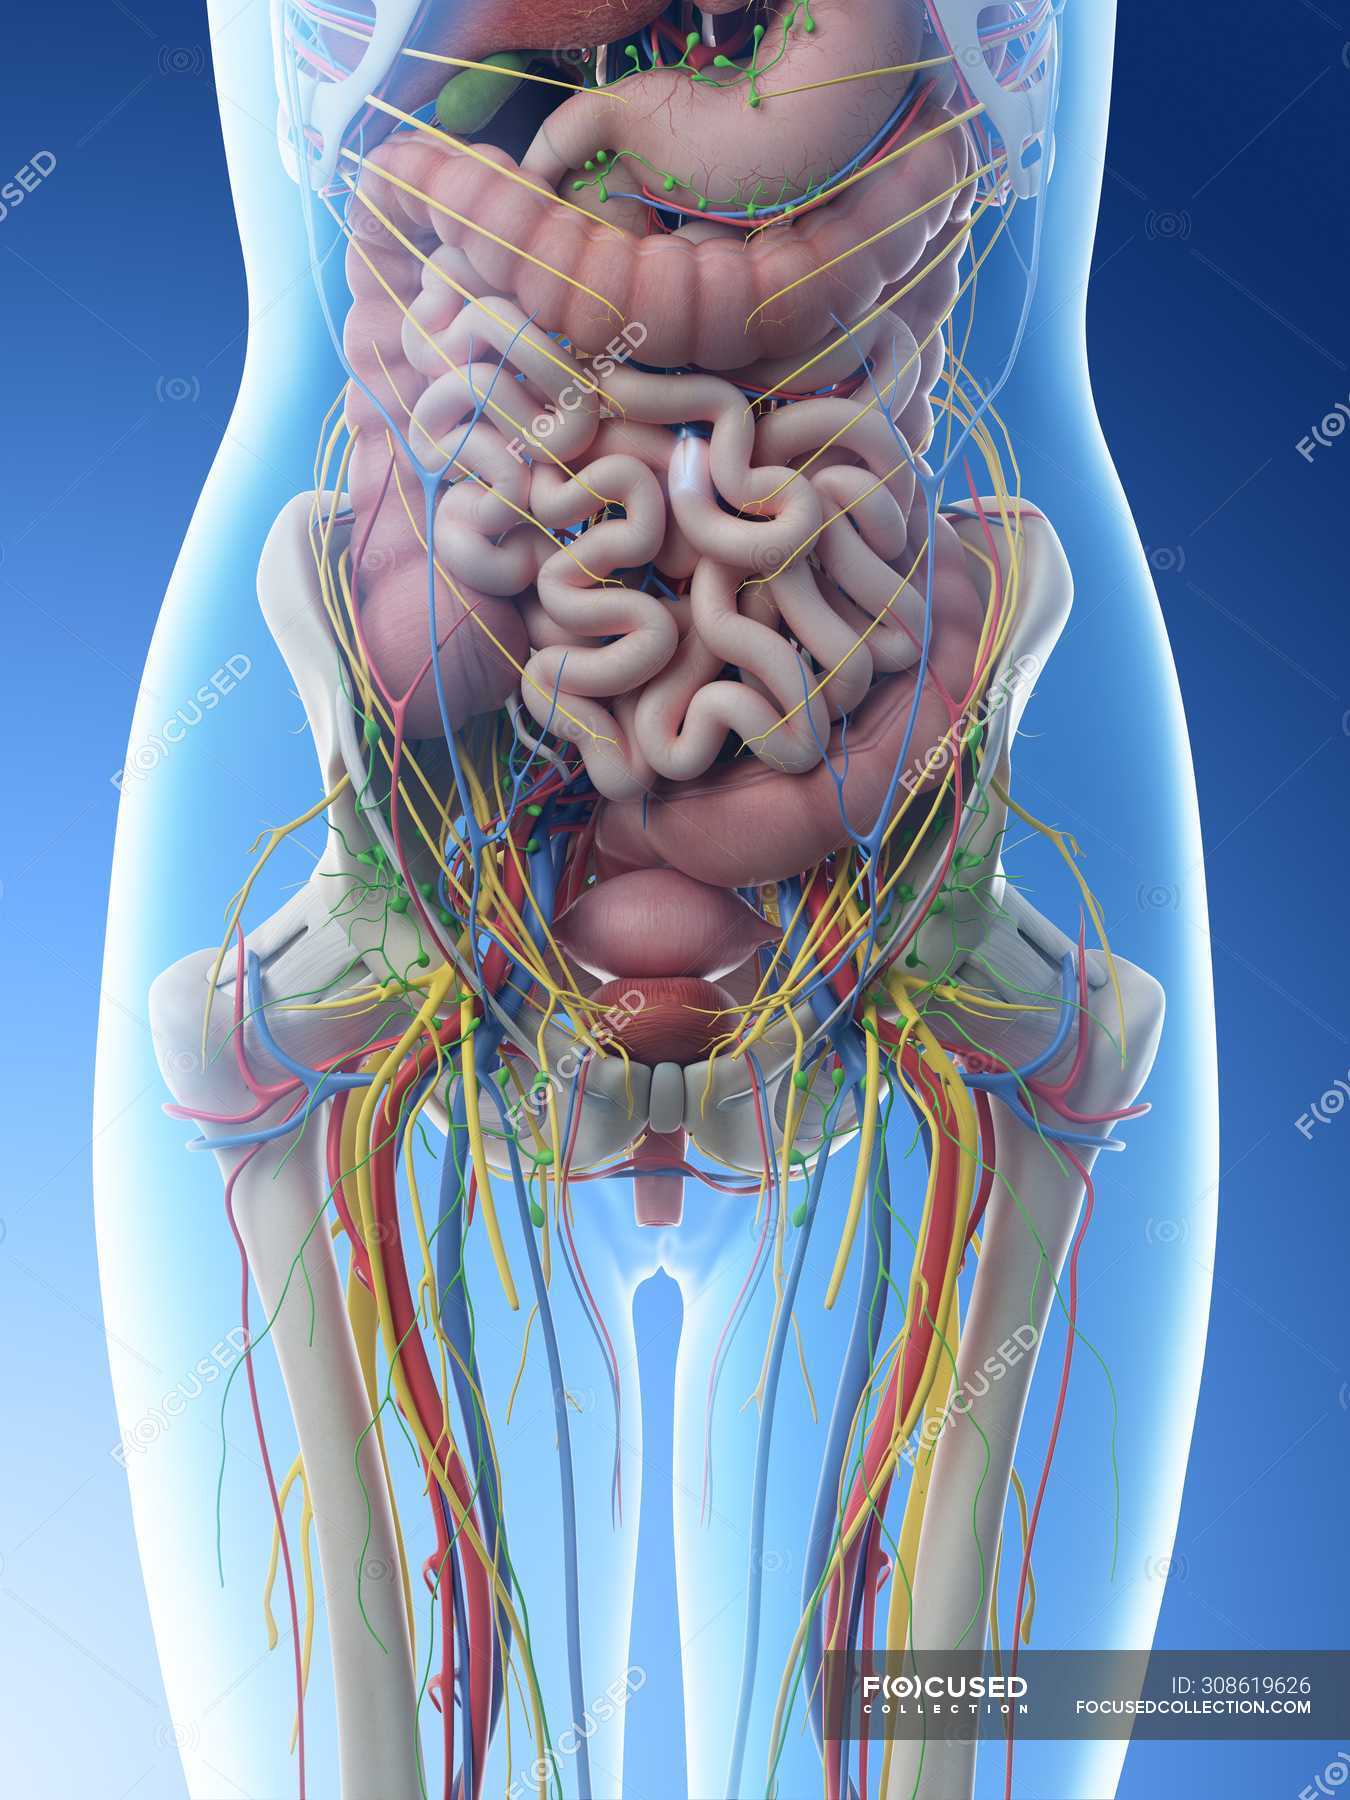 Female abdominal anatomy and internal organs, computer illustration